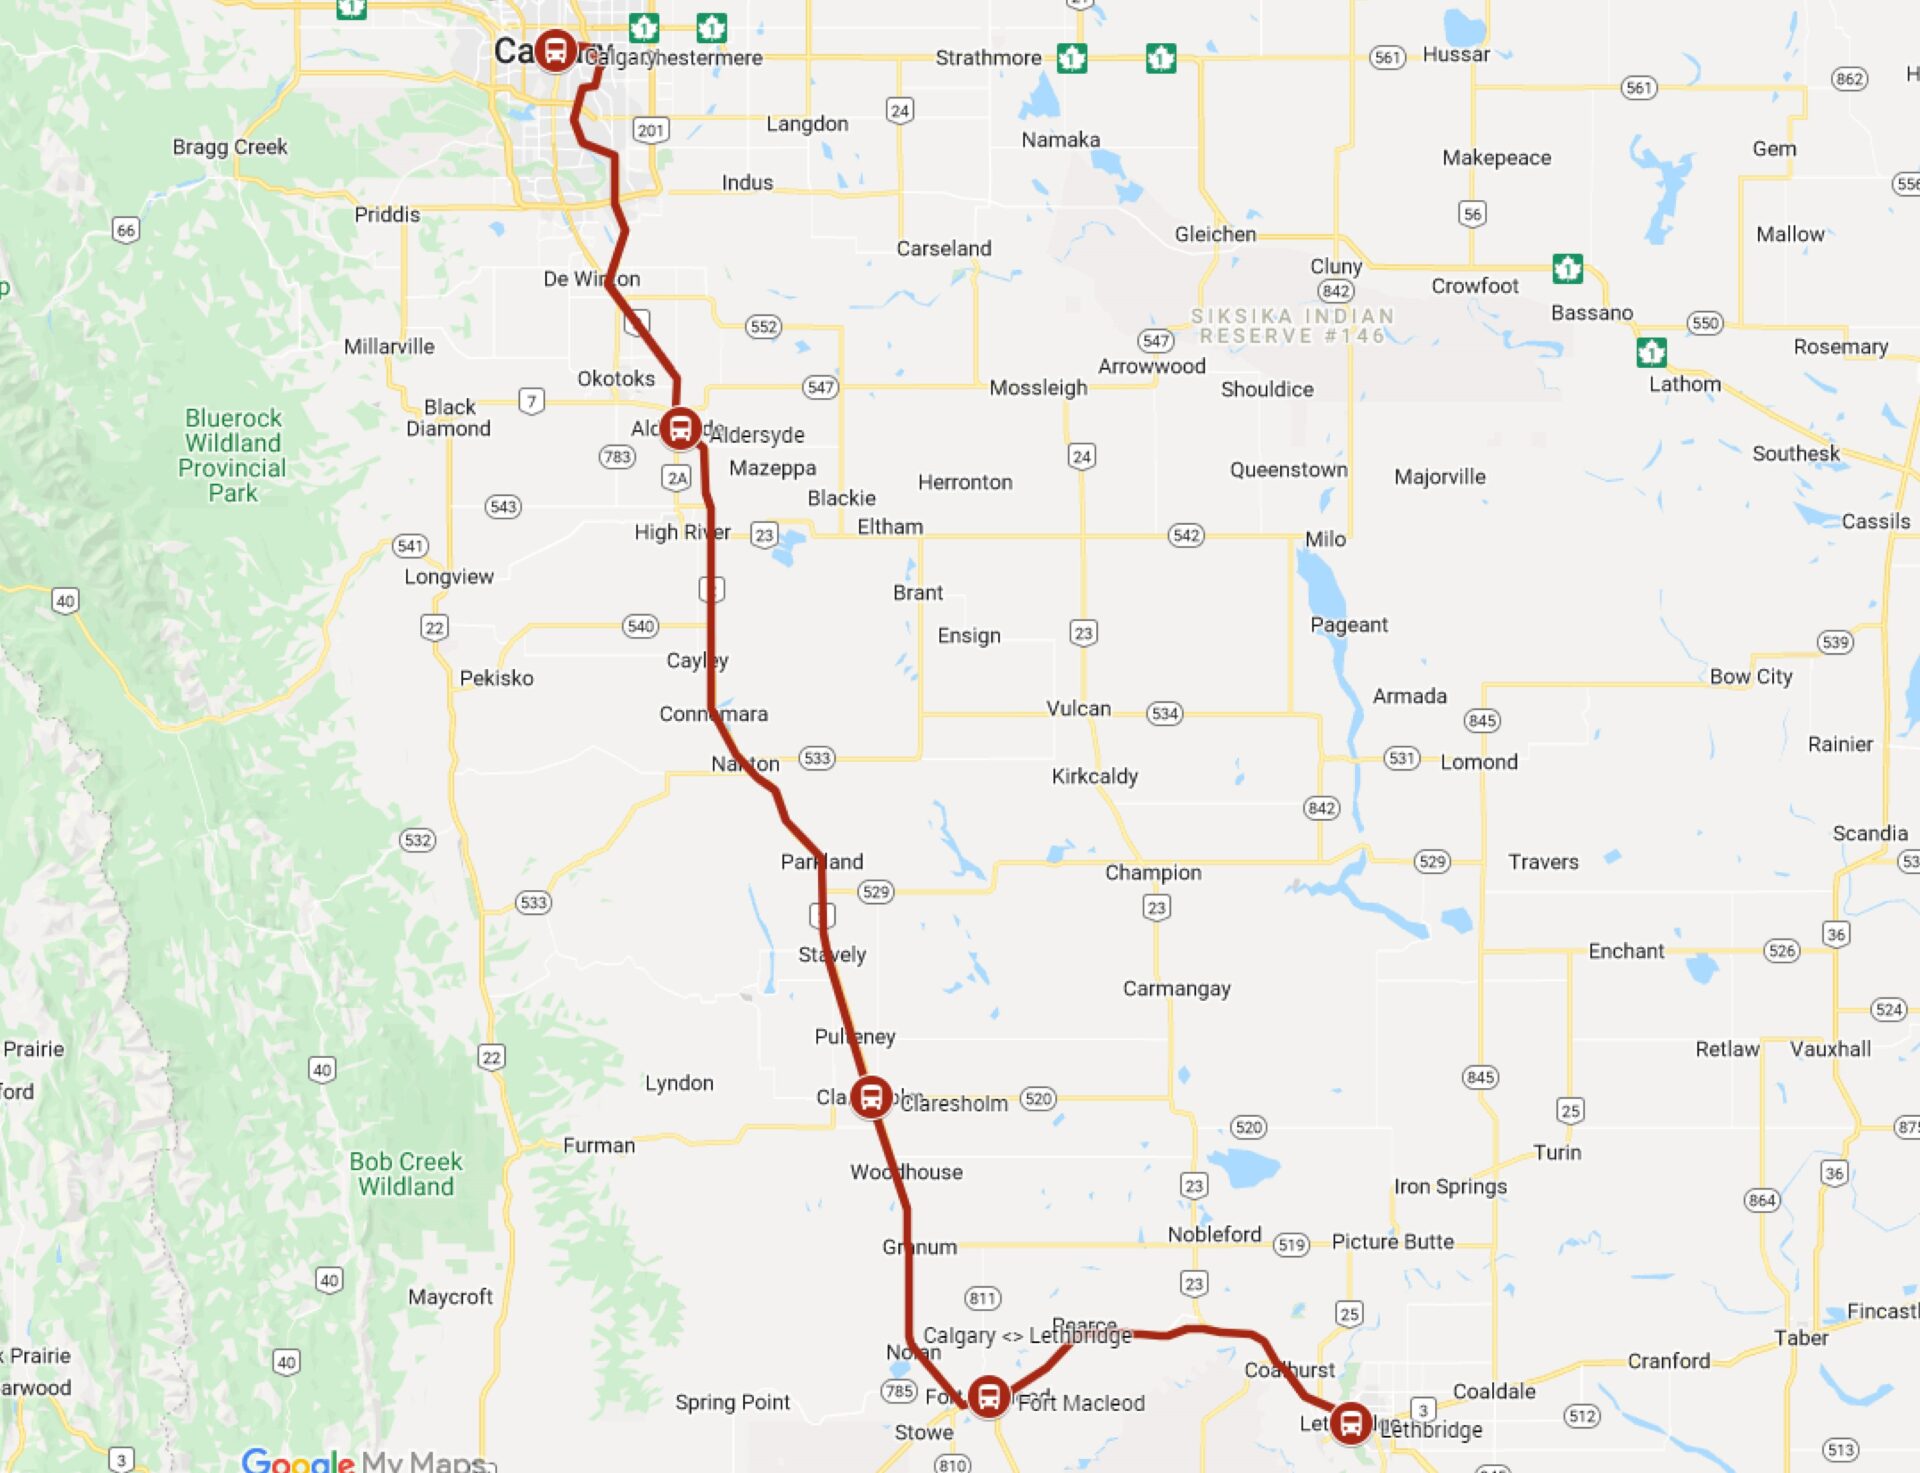 Lethbridge to Calgary - Red Arrow